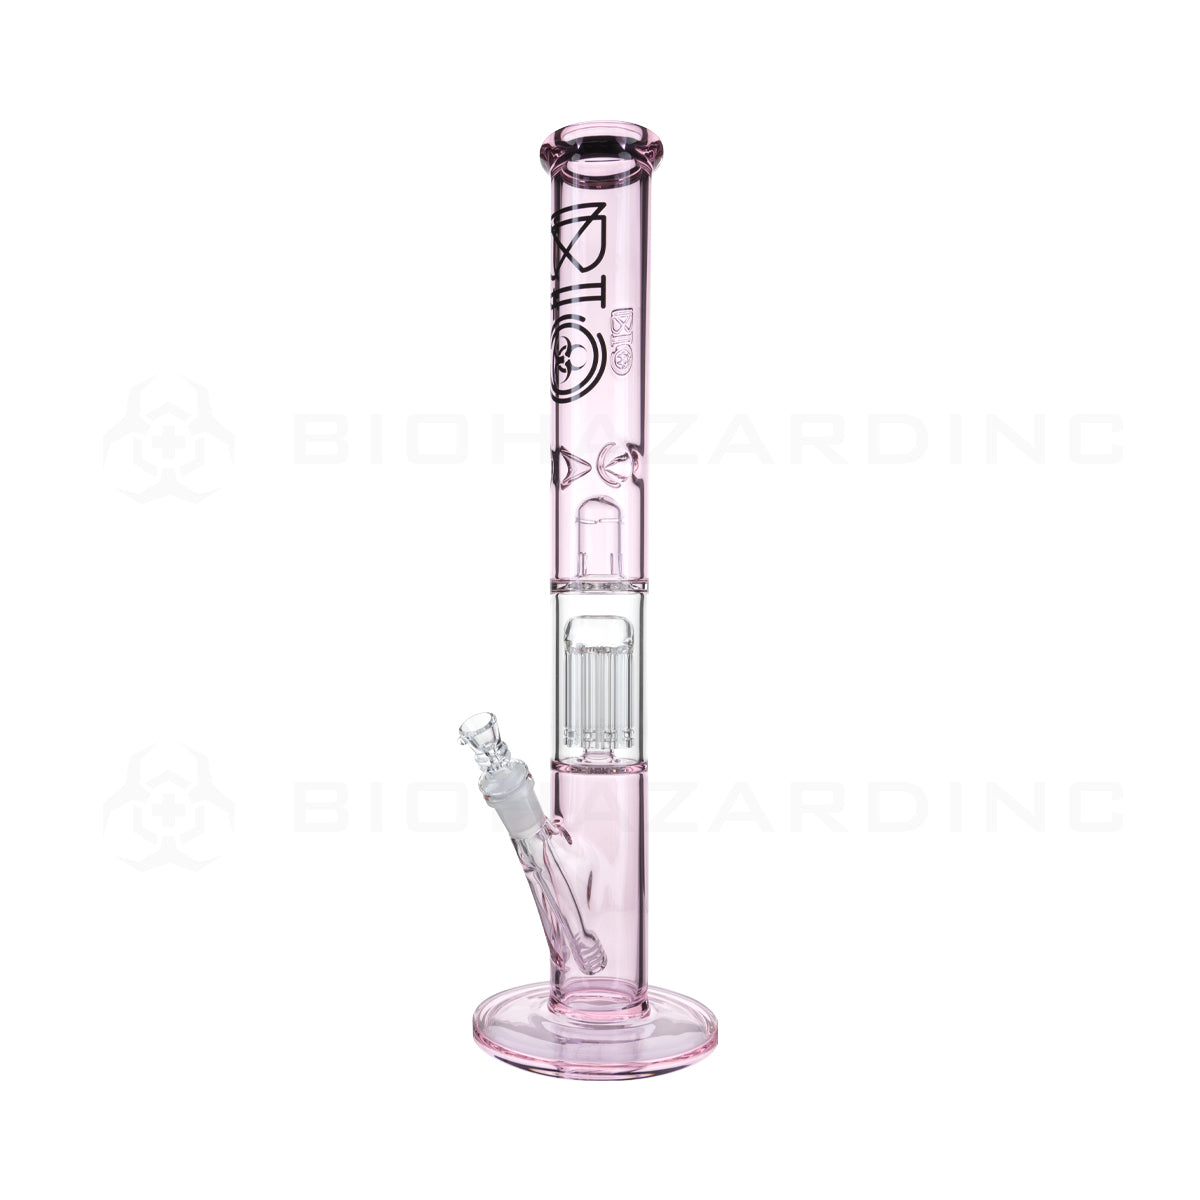 BIO Glass | Single Chamber 10-Arm Tree Percolator + Splash Guard Straight Water Pipe | 18" - 14mm - Pink Glass Bong Bio Glass   